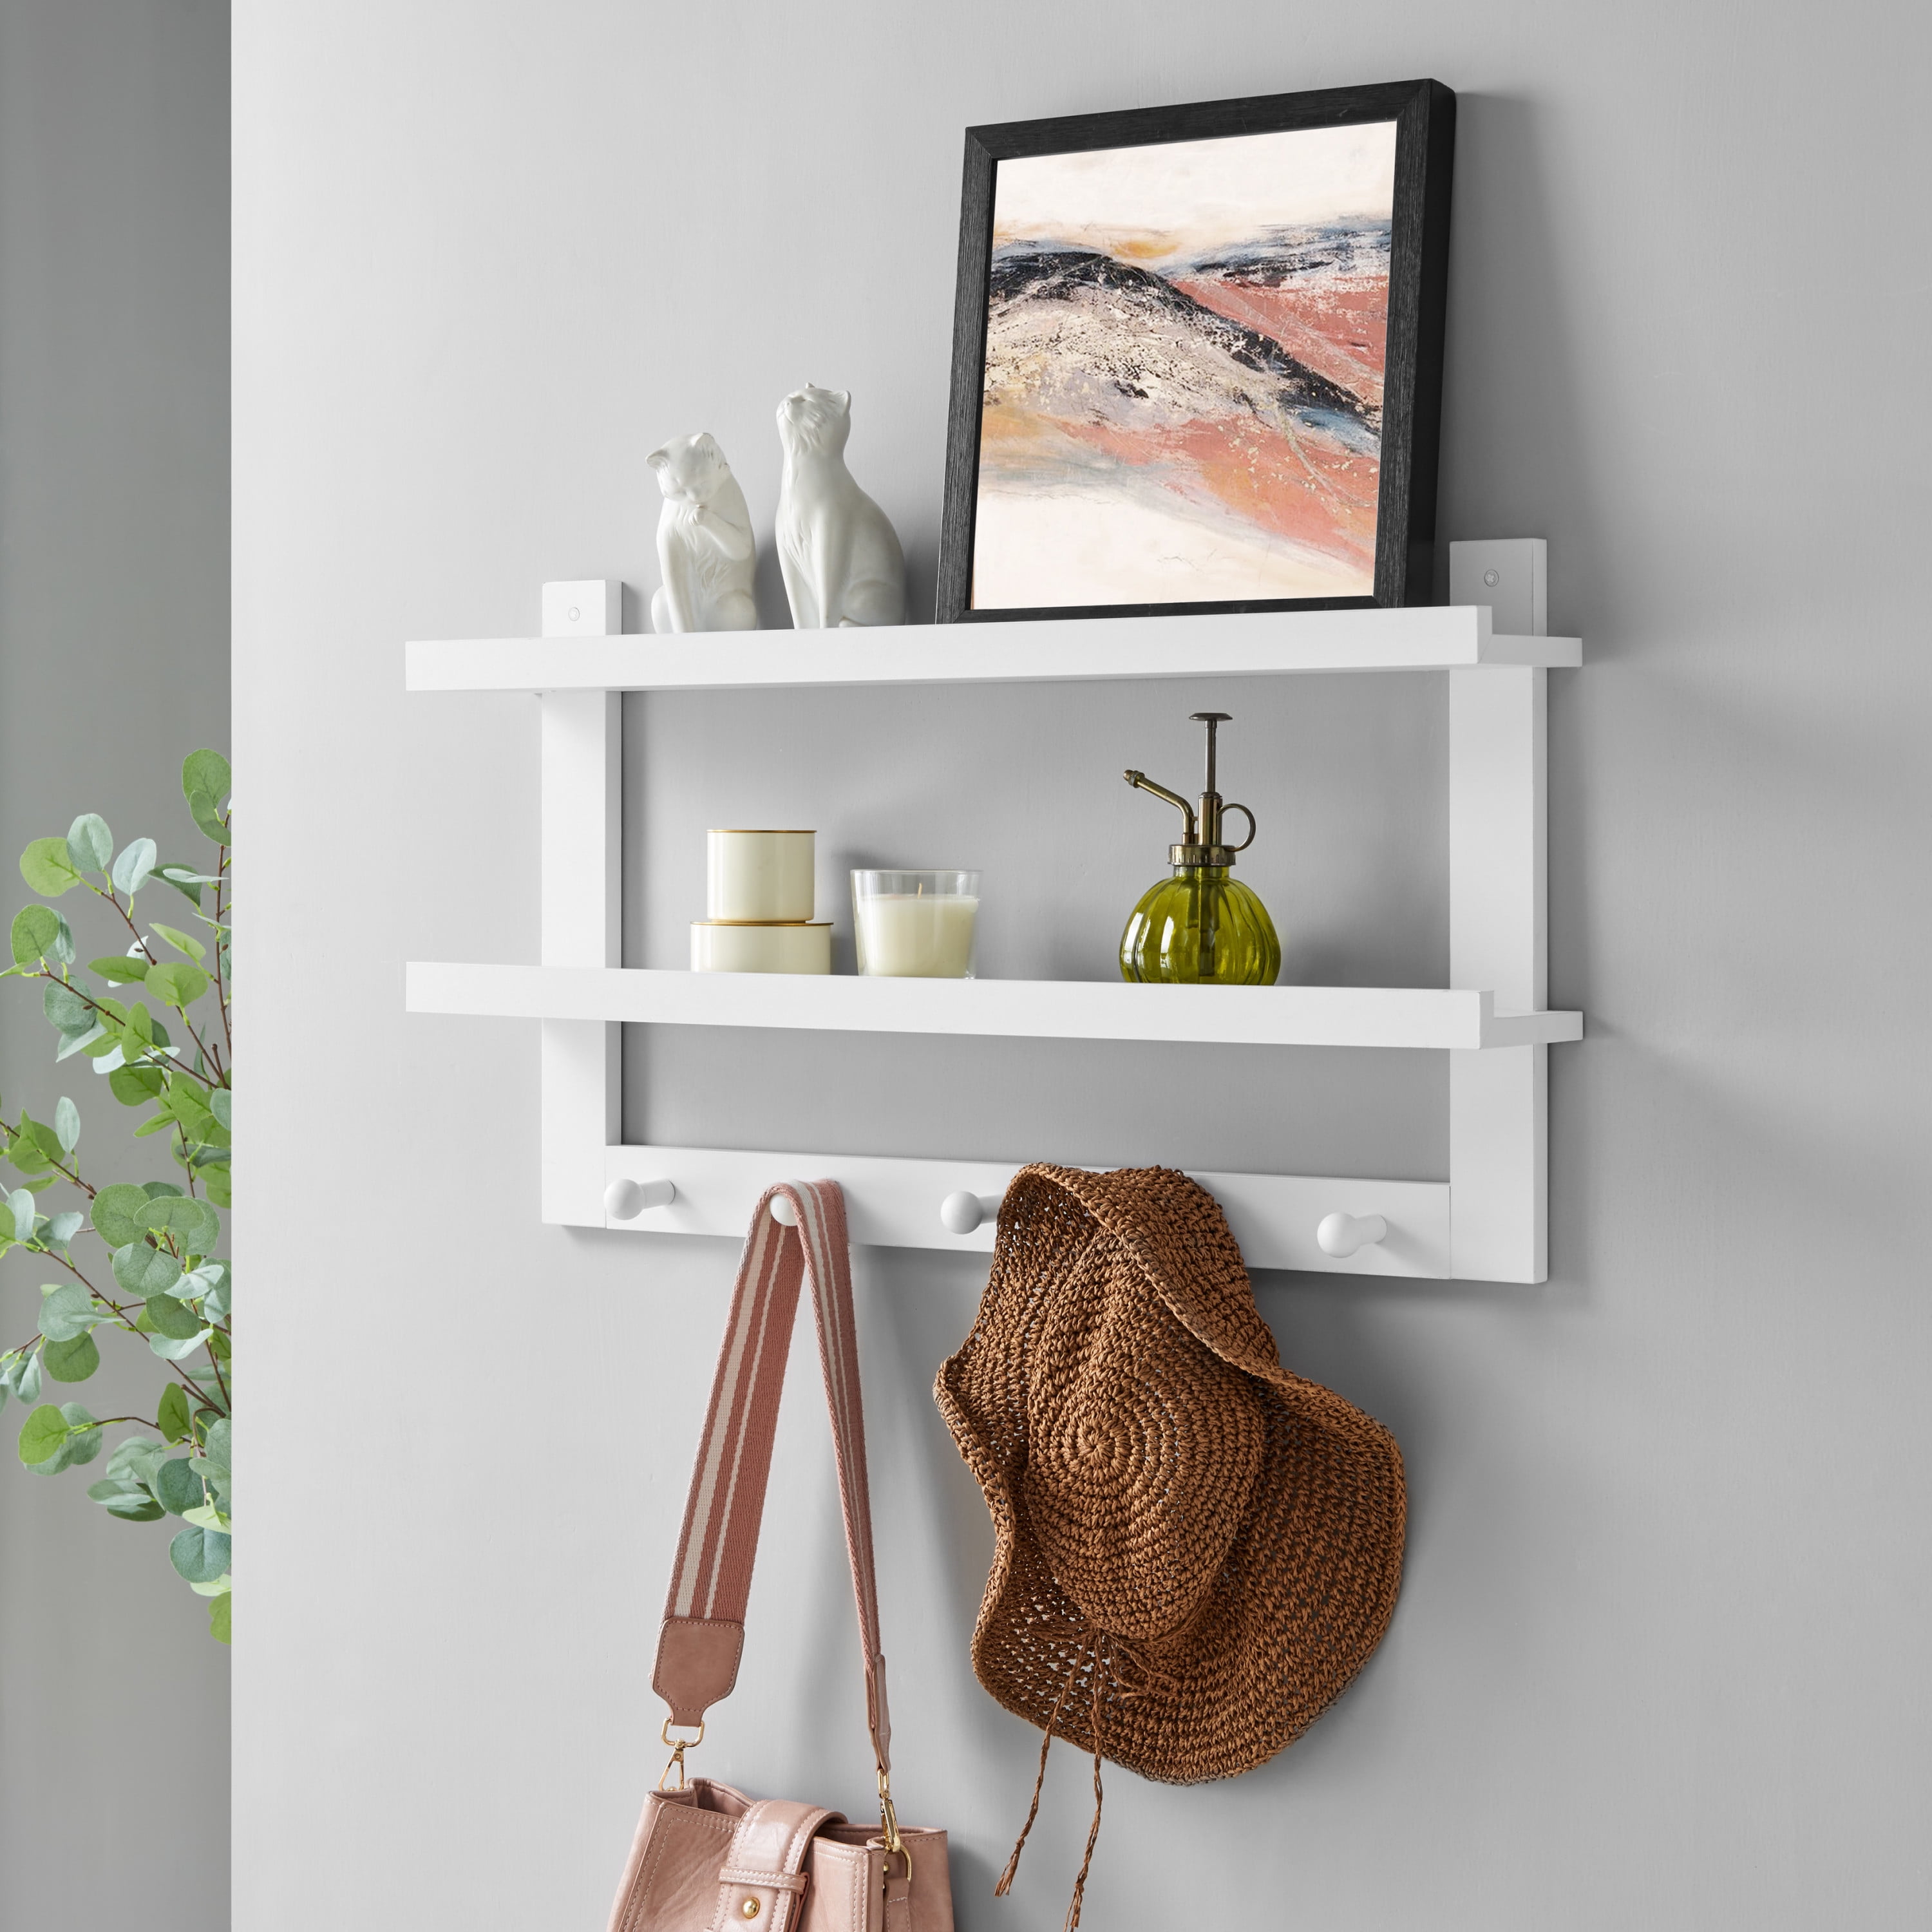 Danya B. 2-Tier Ledge Wall Shelf Organizer with Five Hanging Coat or Towel  Hooks - Entryway or Bathroom - White 